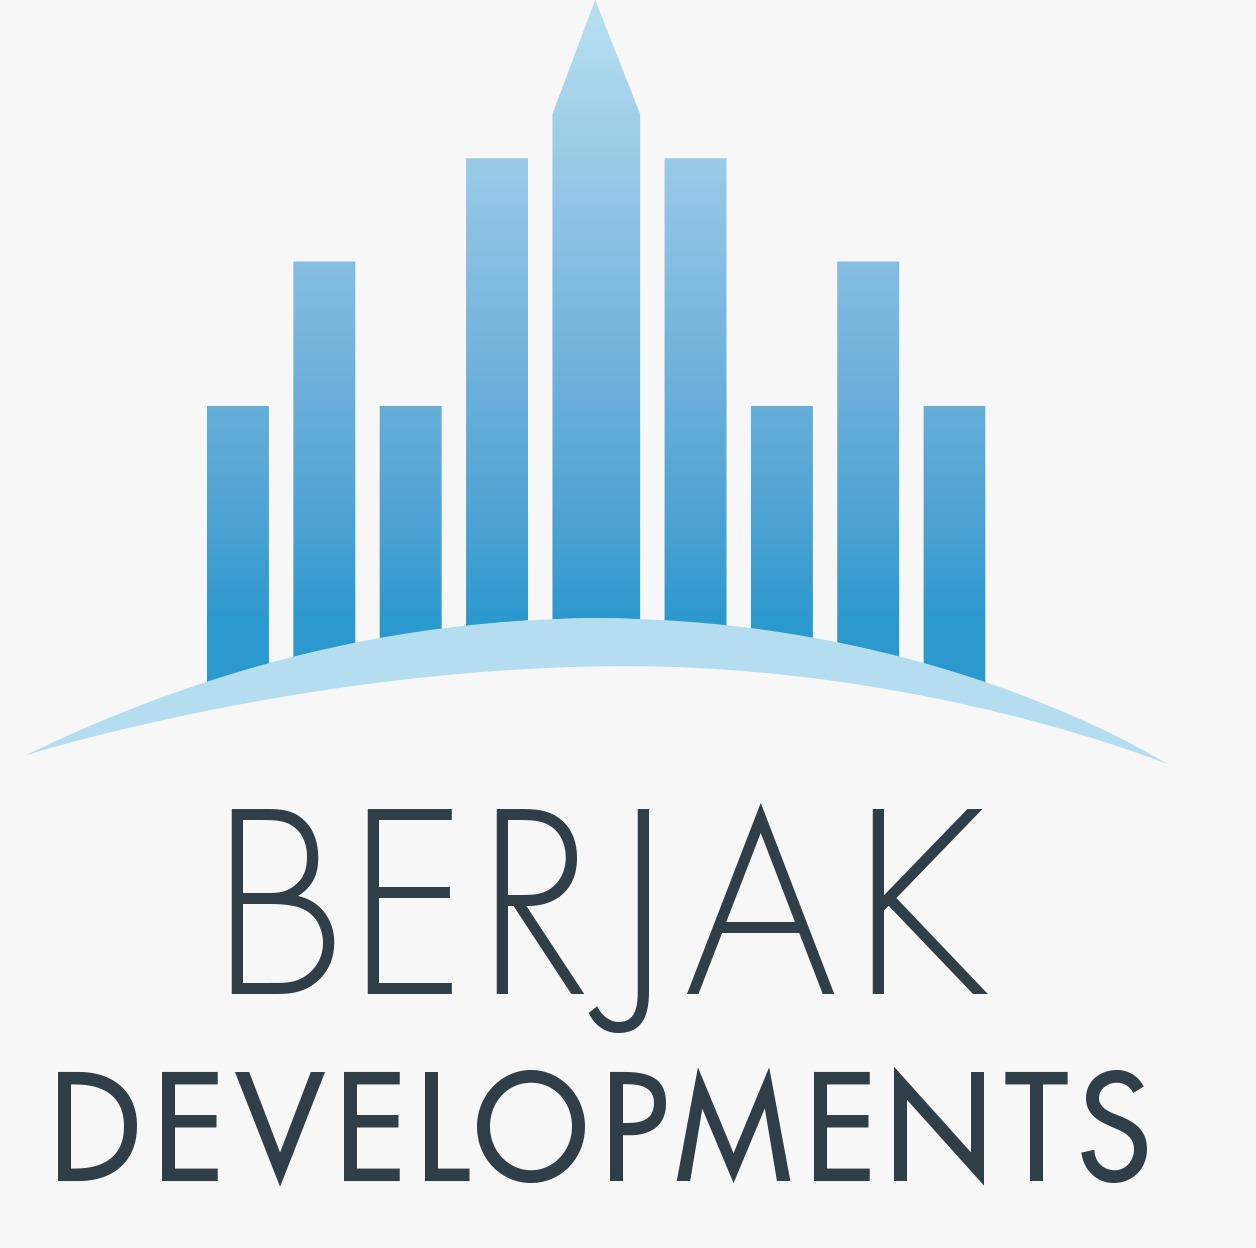 Berjak Development Is An Innovative Concrete Company Serving Edmonton And Northern Regions